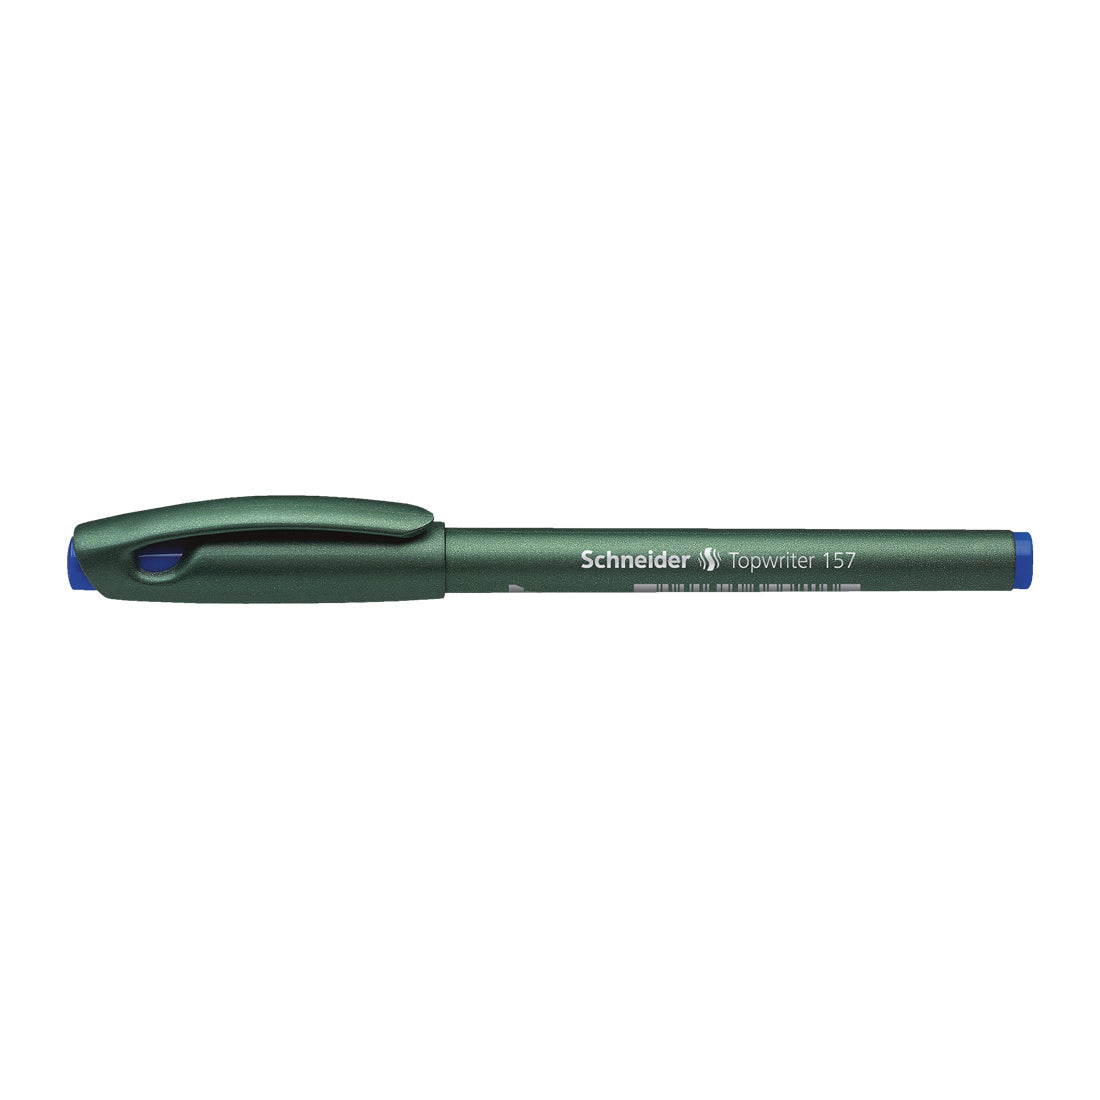 Topwriter 157 Fibre Pen 0.8mm, Box of 10#ink-colour_blue